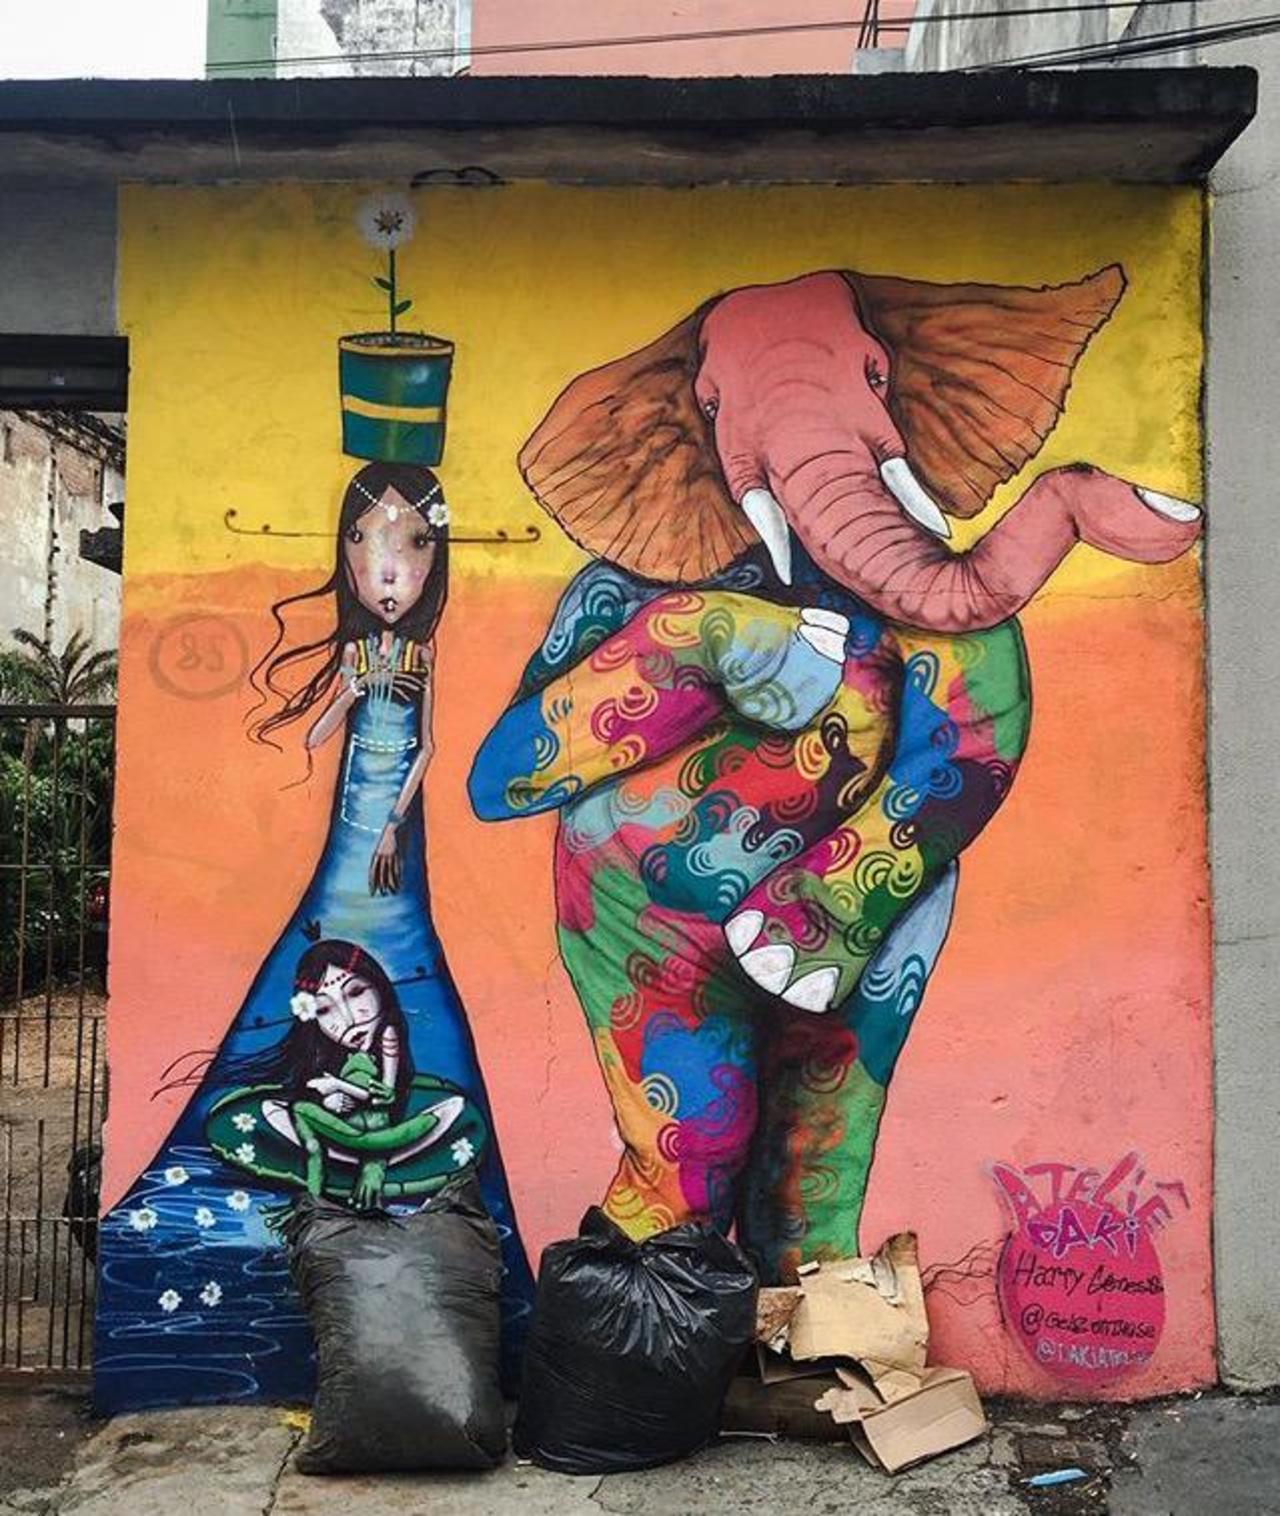 Street Art by Harry Geneis & Gelson in São Paulo 

#art #mural #graffiti #streetart http://t.co/SlLbhuMZfD